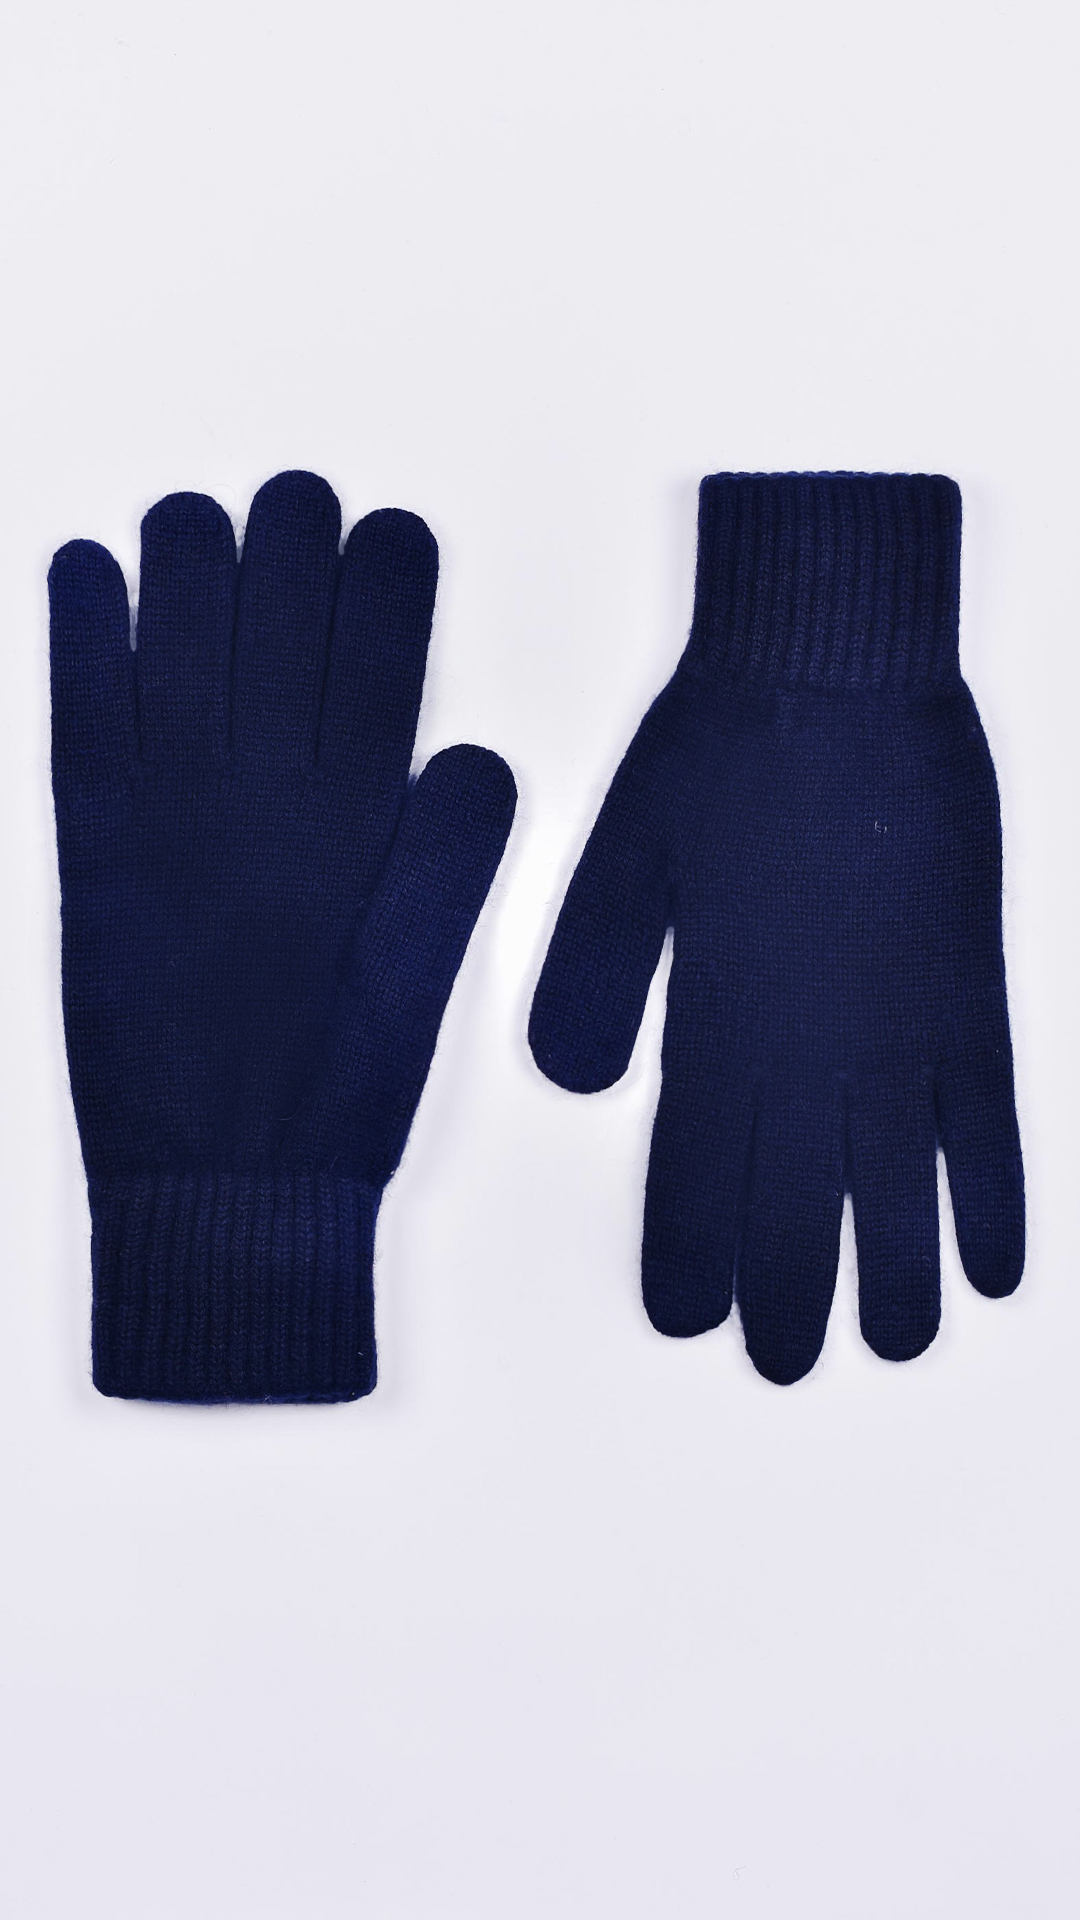 Glovesdario navy 1 1stAmerican guanti 100% puro cashmere da uomo Made in Italy - caldi guanti invernali